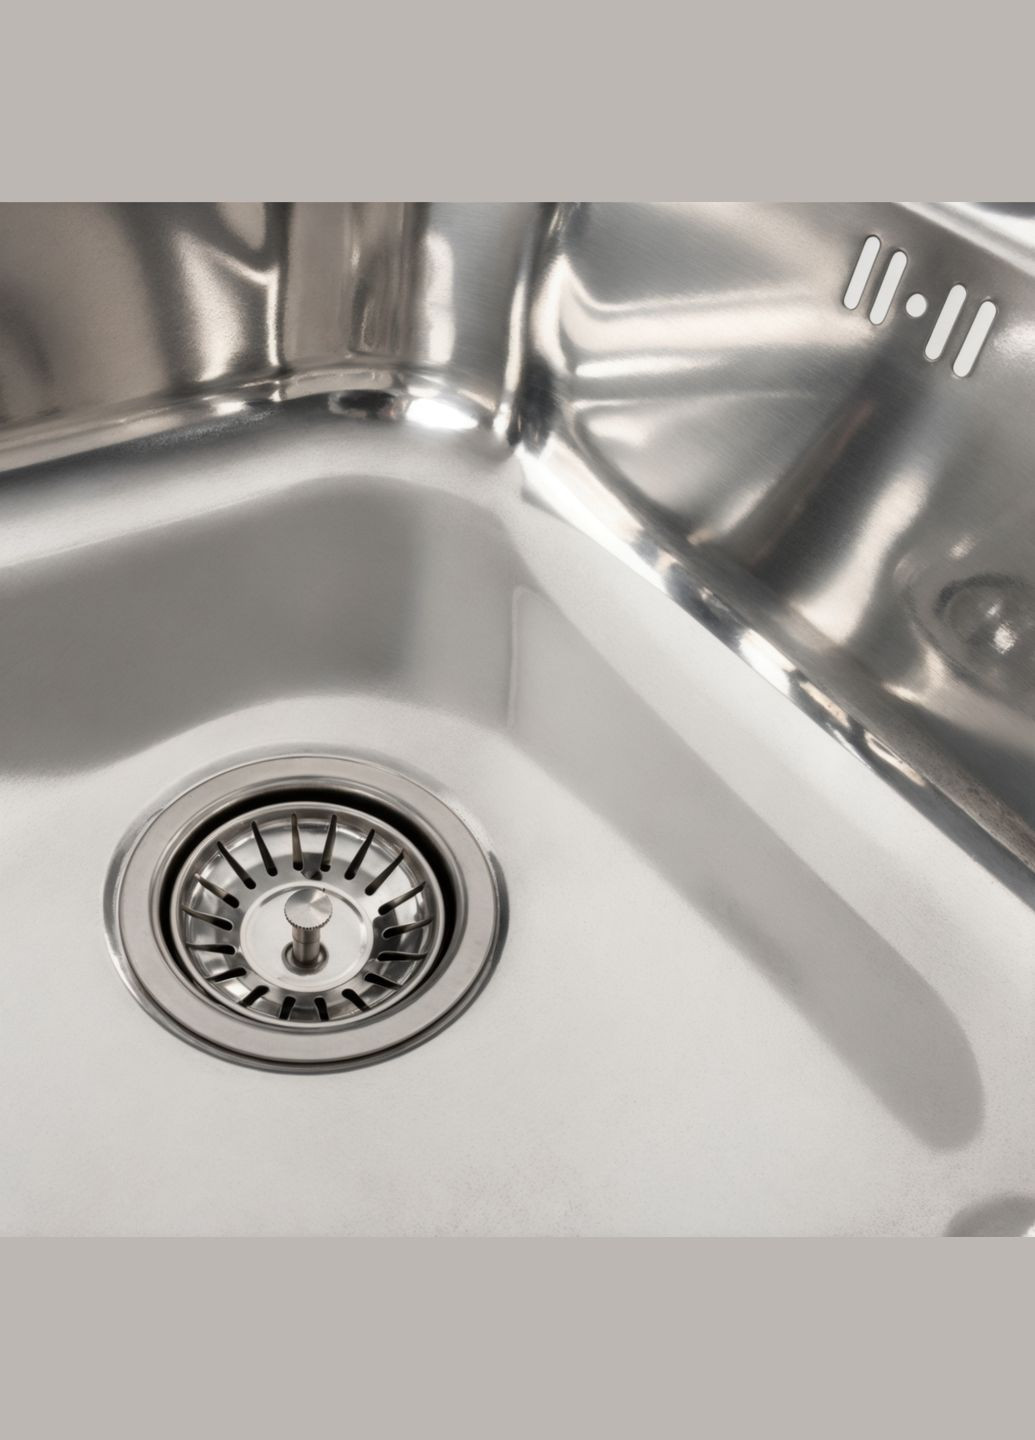 Кухонна мийка Platinum (269794914)